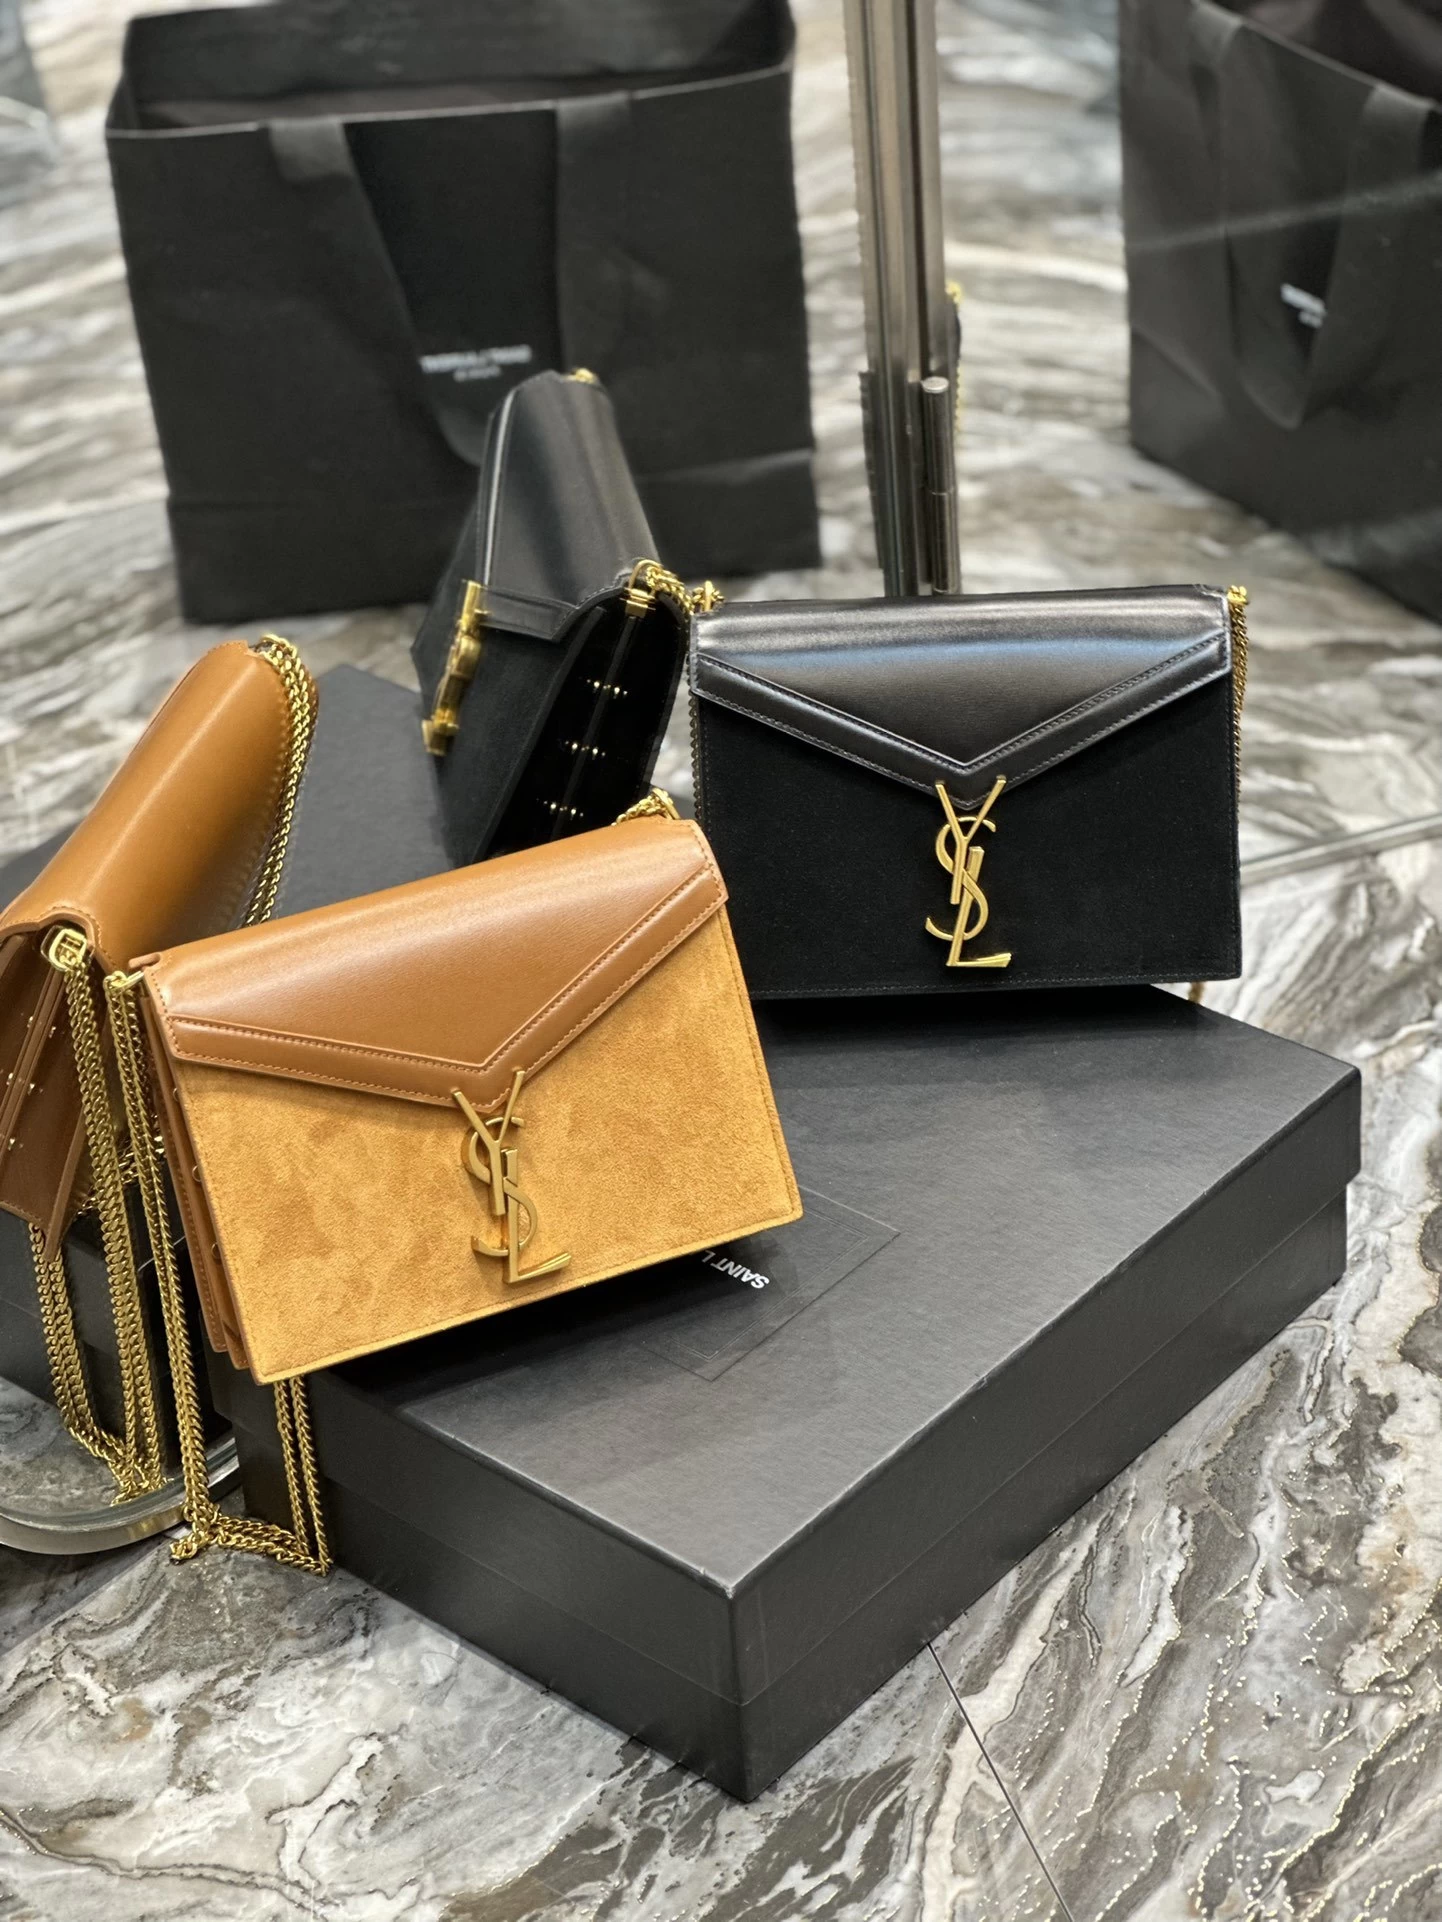 Wholesale Replica Tote Bag Supplier Brand Designer Women Ysl Luxury Handbags  Shoulder Bags - China Handbags and Bags price